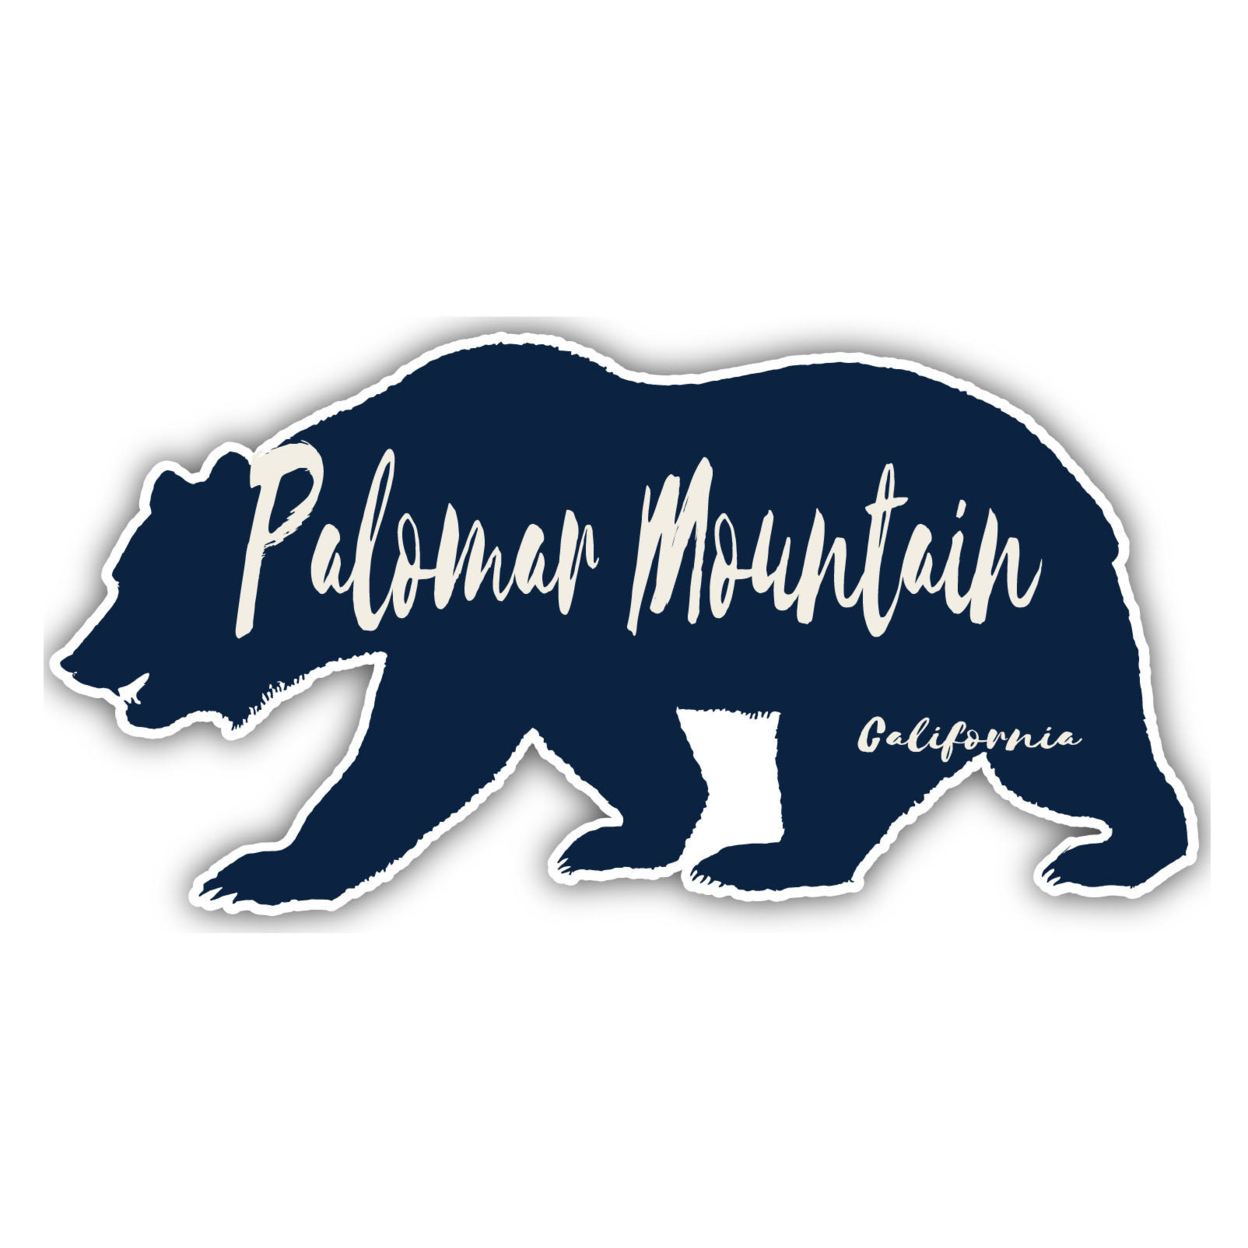 Palomar Mountain California Souvenir Decorative Stickers (Choose Theme And Size) - Single Unit, 4-Inch, Tent